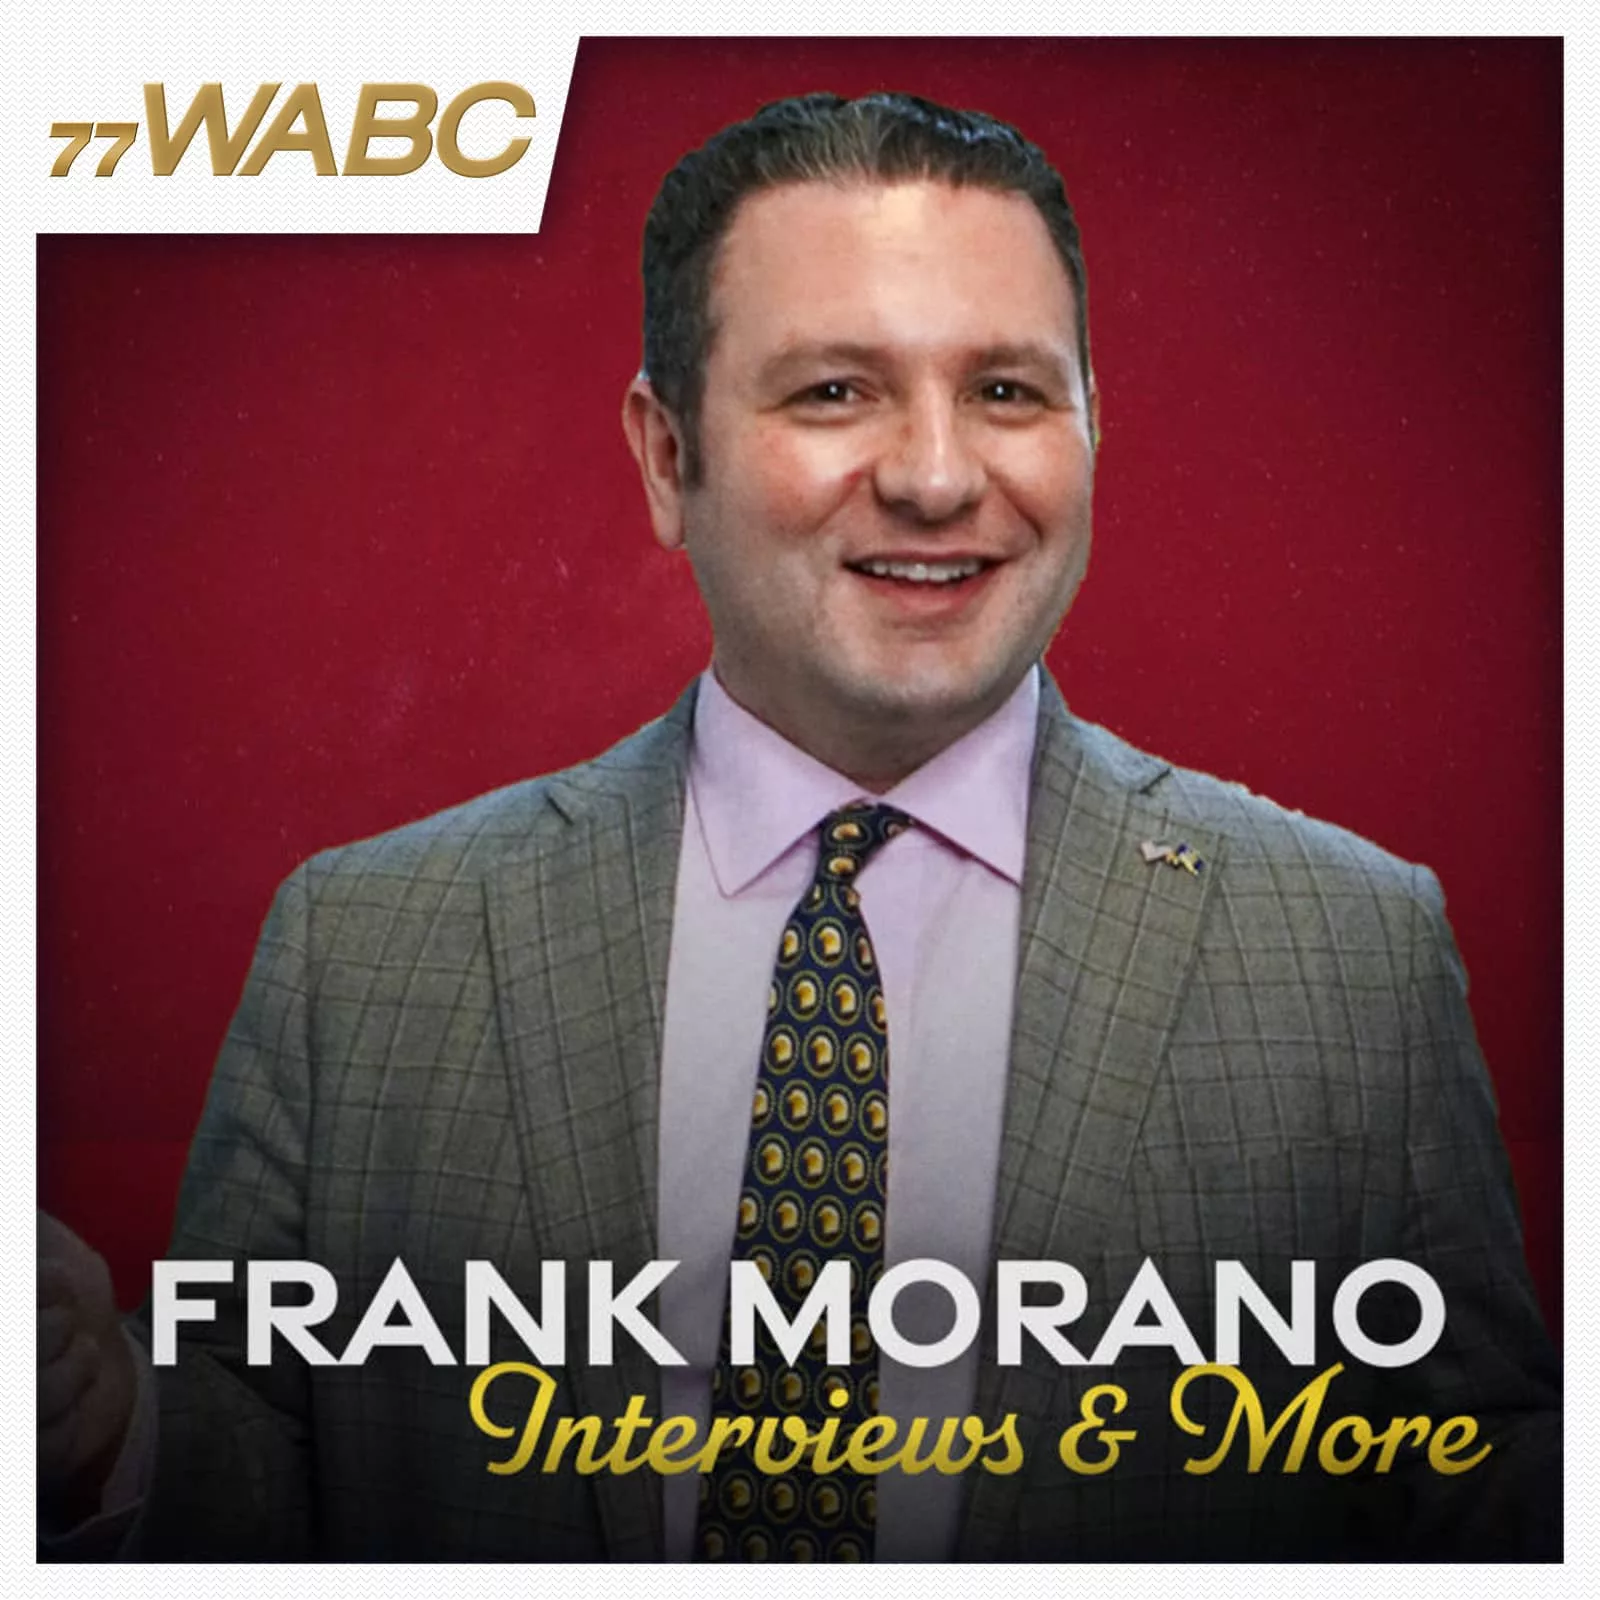 frank-morano-interviews-and-more-podcast-new-logo905469